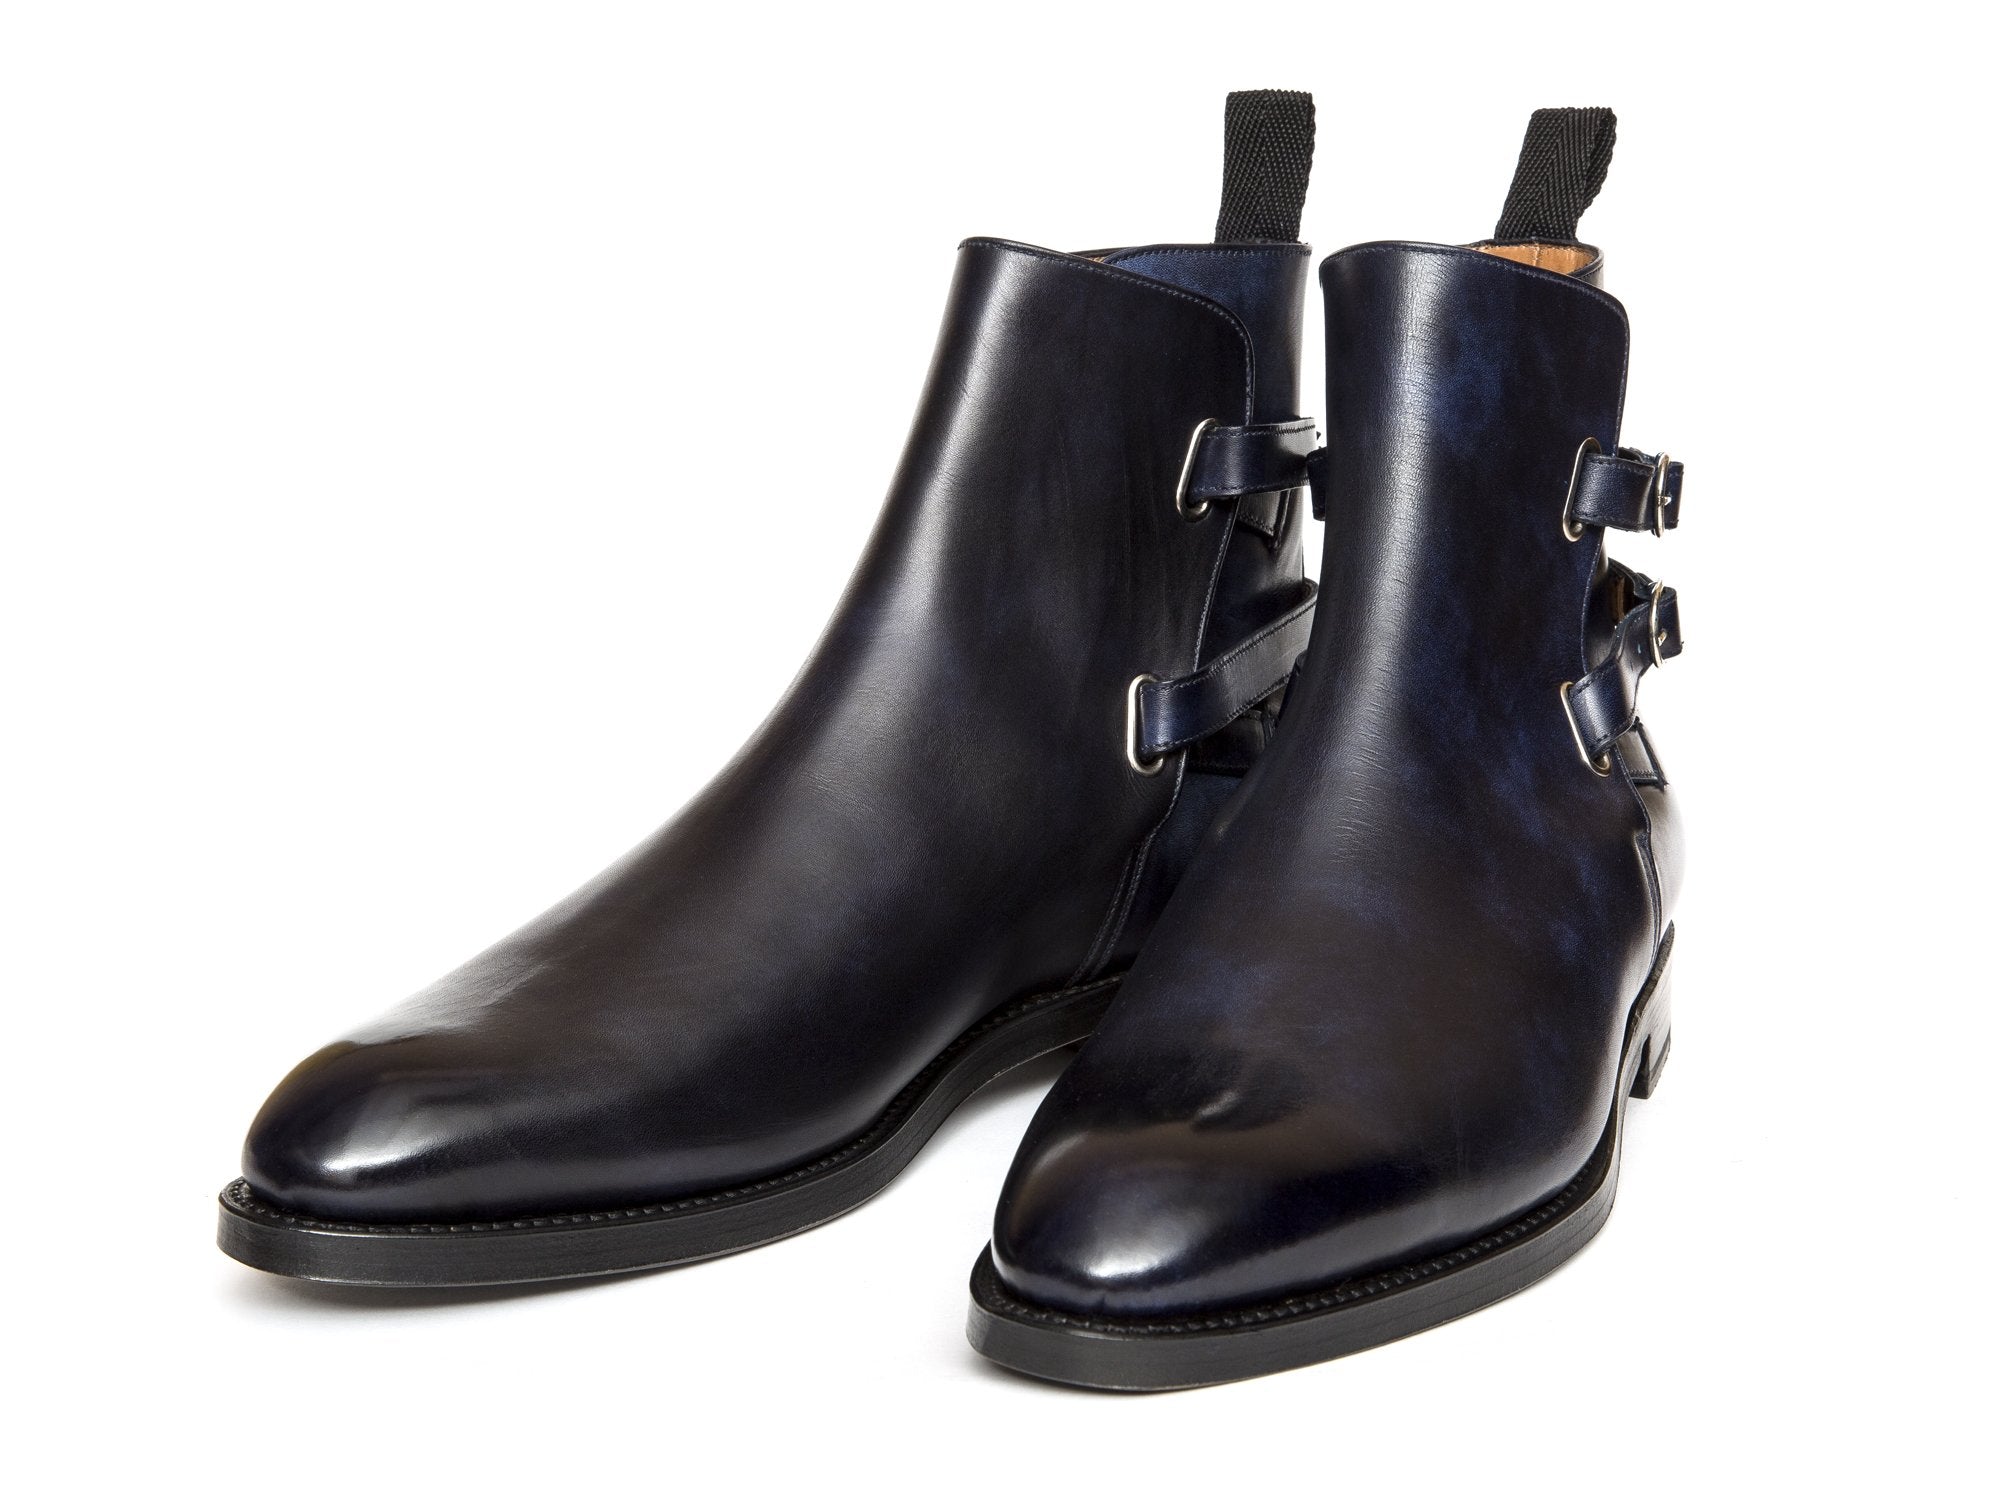 J.FitzPatrick Footwear - Genesee - Navy Museum Calf - NGT last - Double Leather Sole